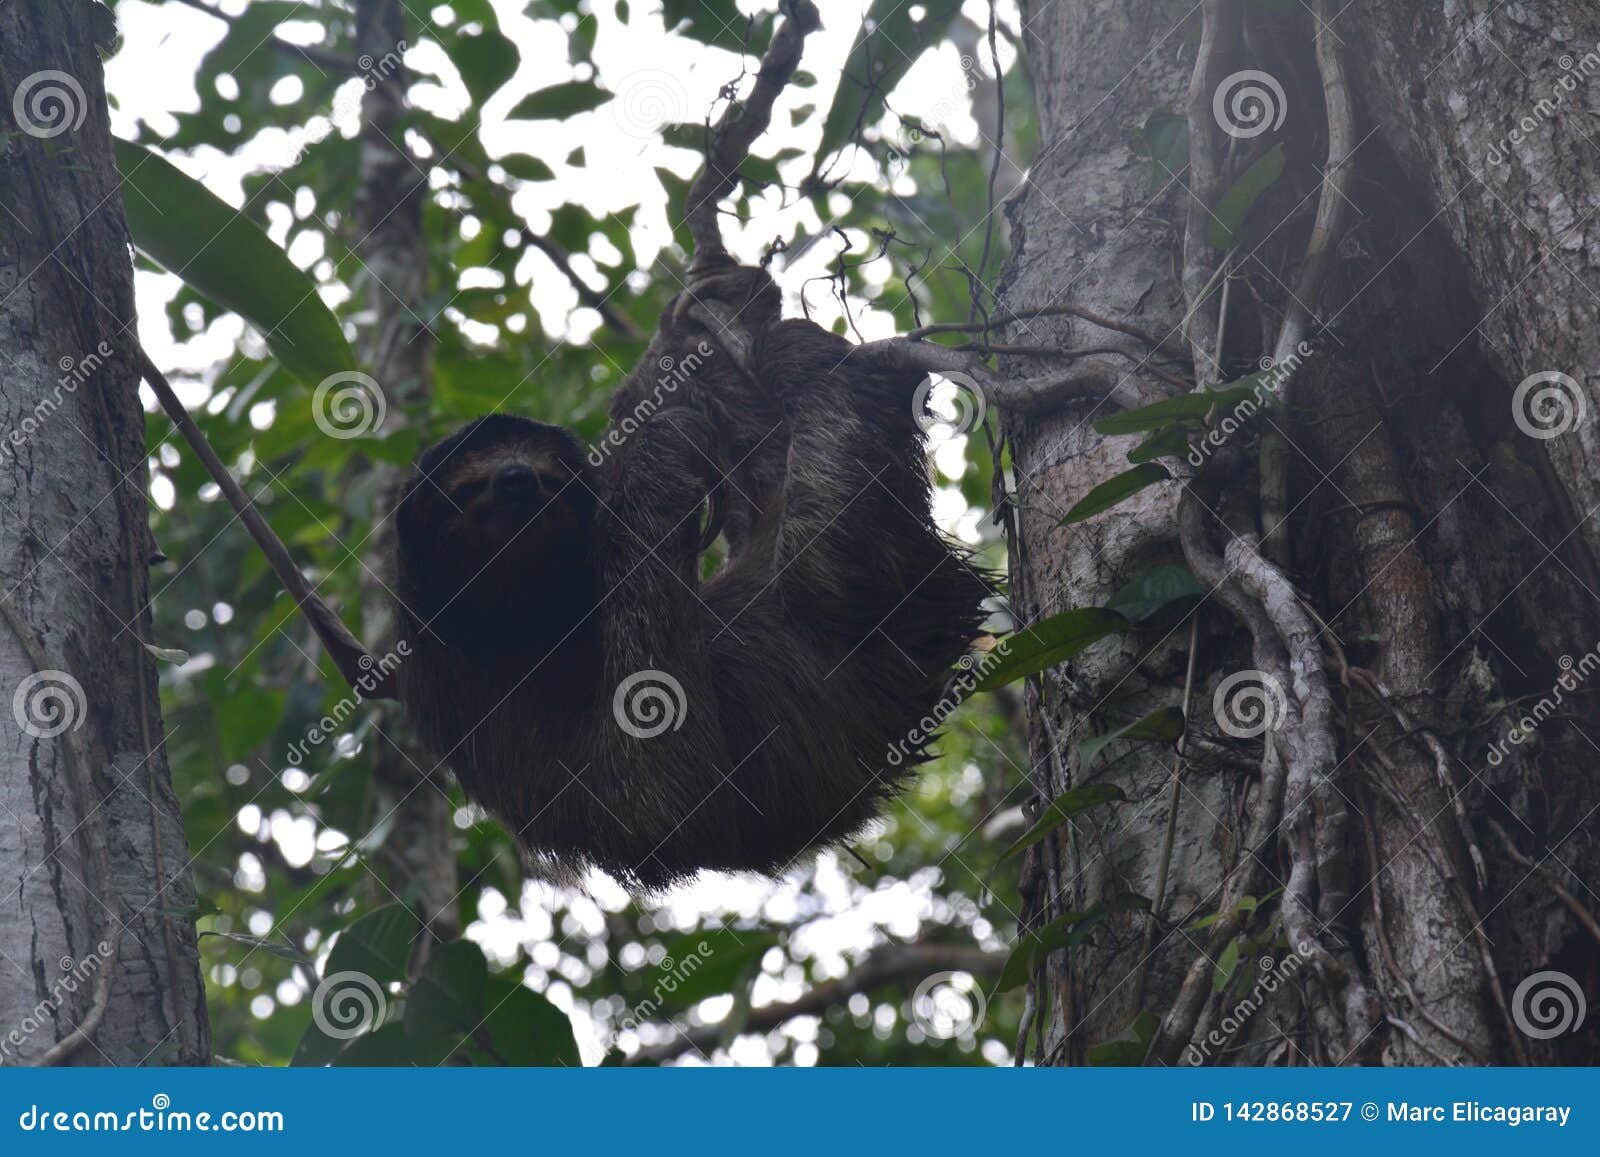 sloth hanging in a tree in bocas del toro panama